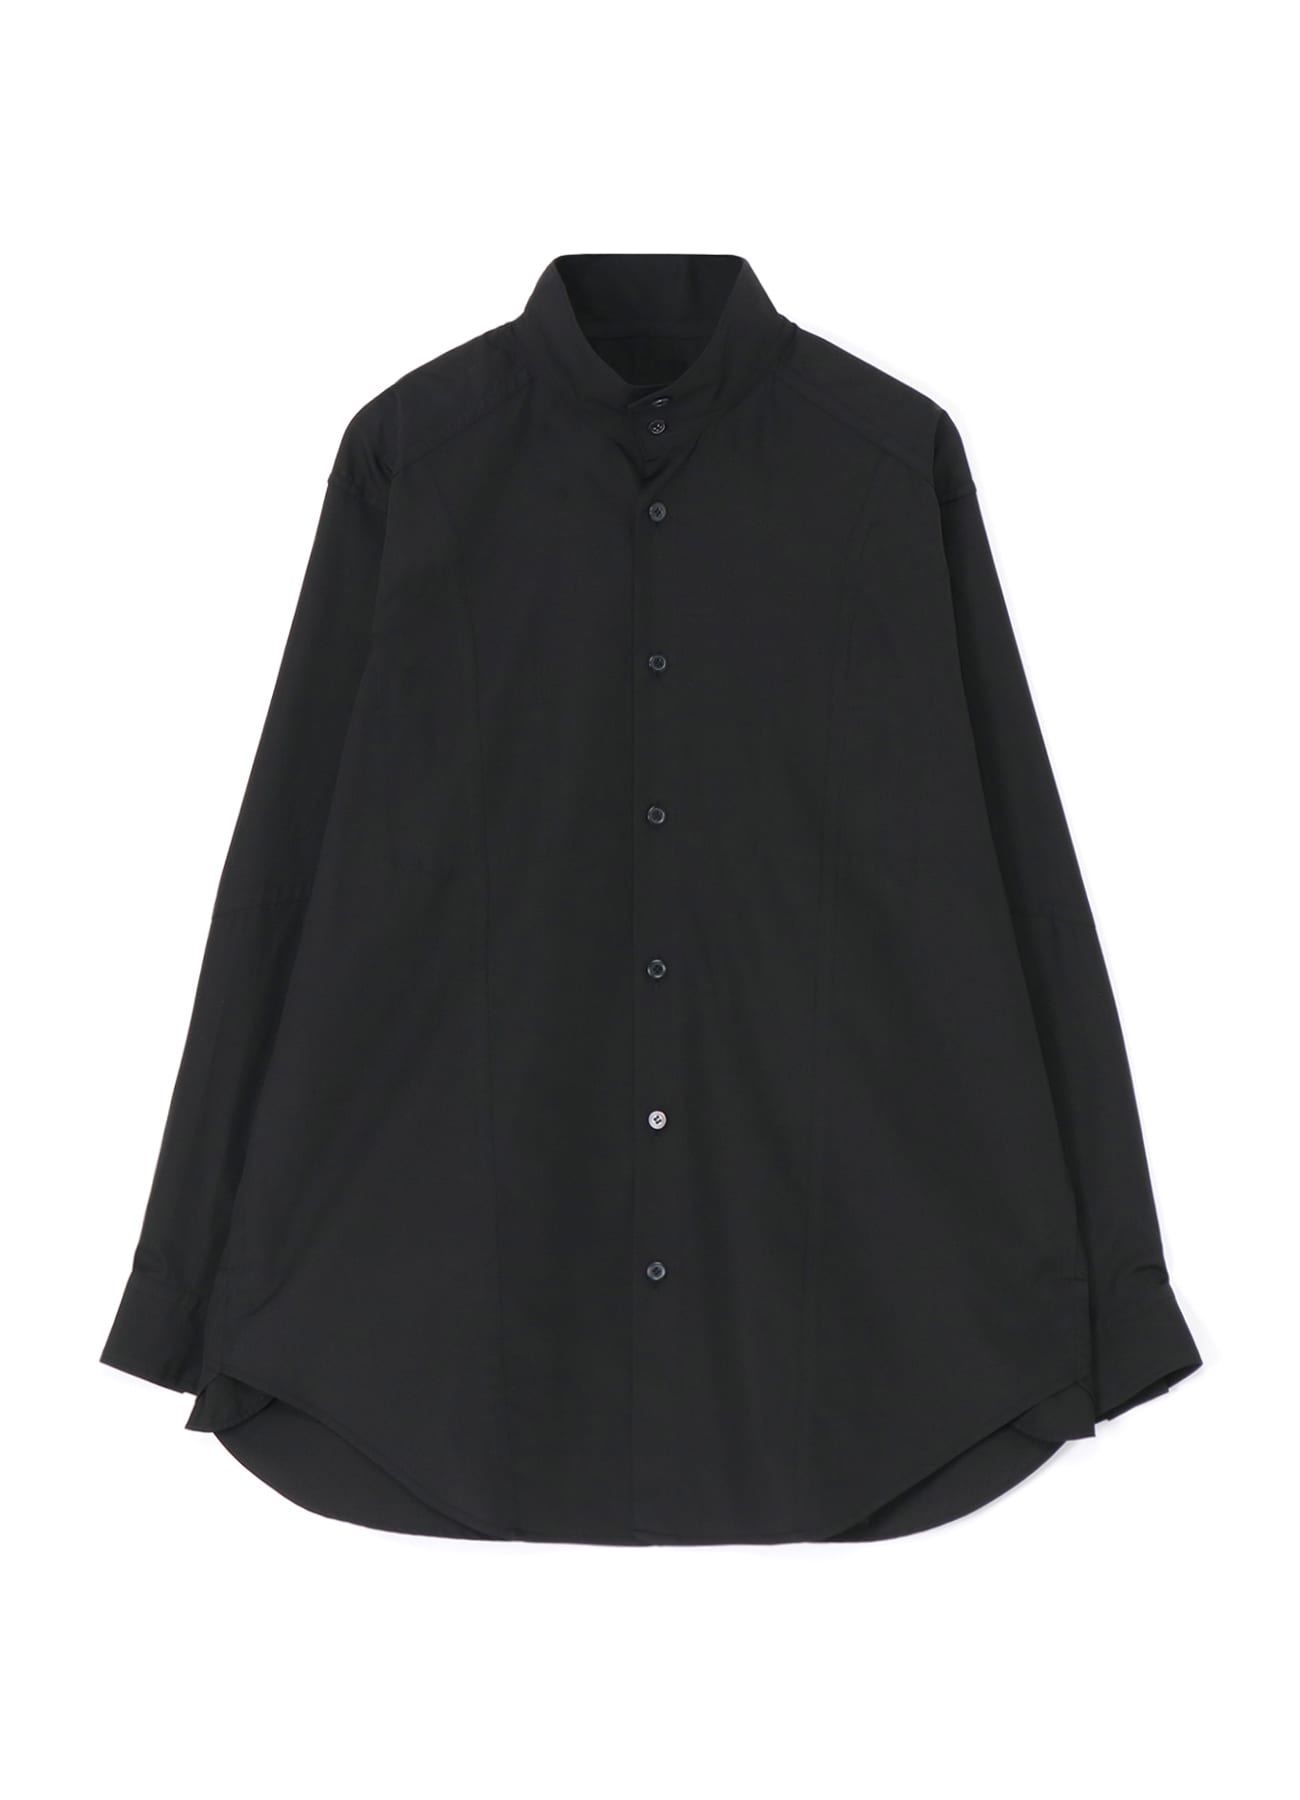 WILDSIDE × Kie Einzelganger Cotton Broadcloth Shirt